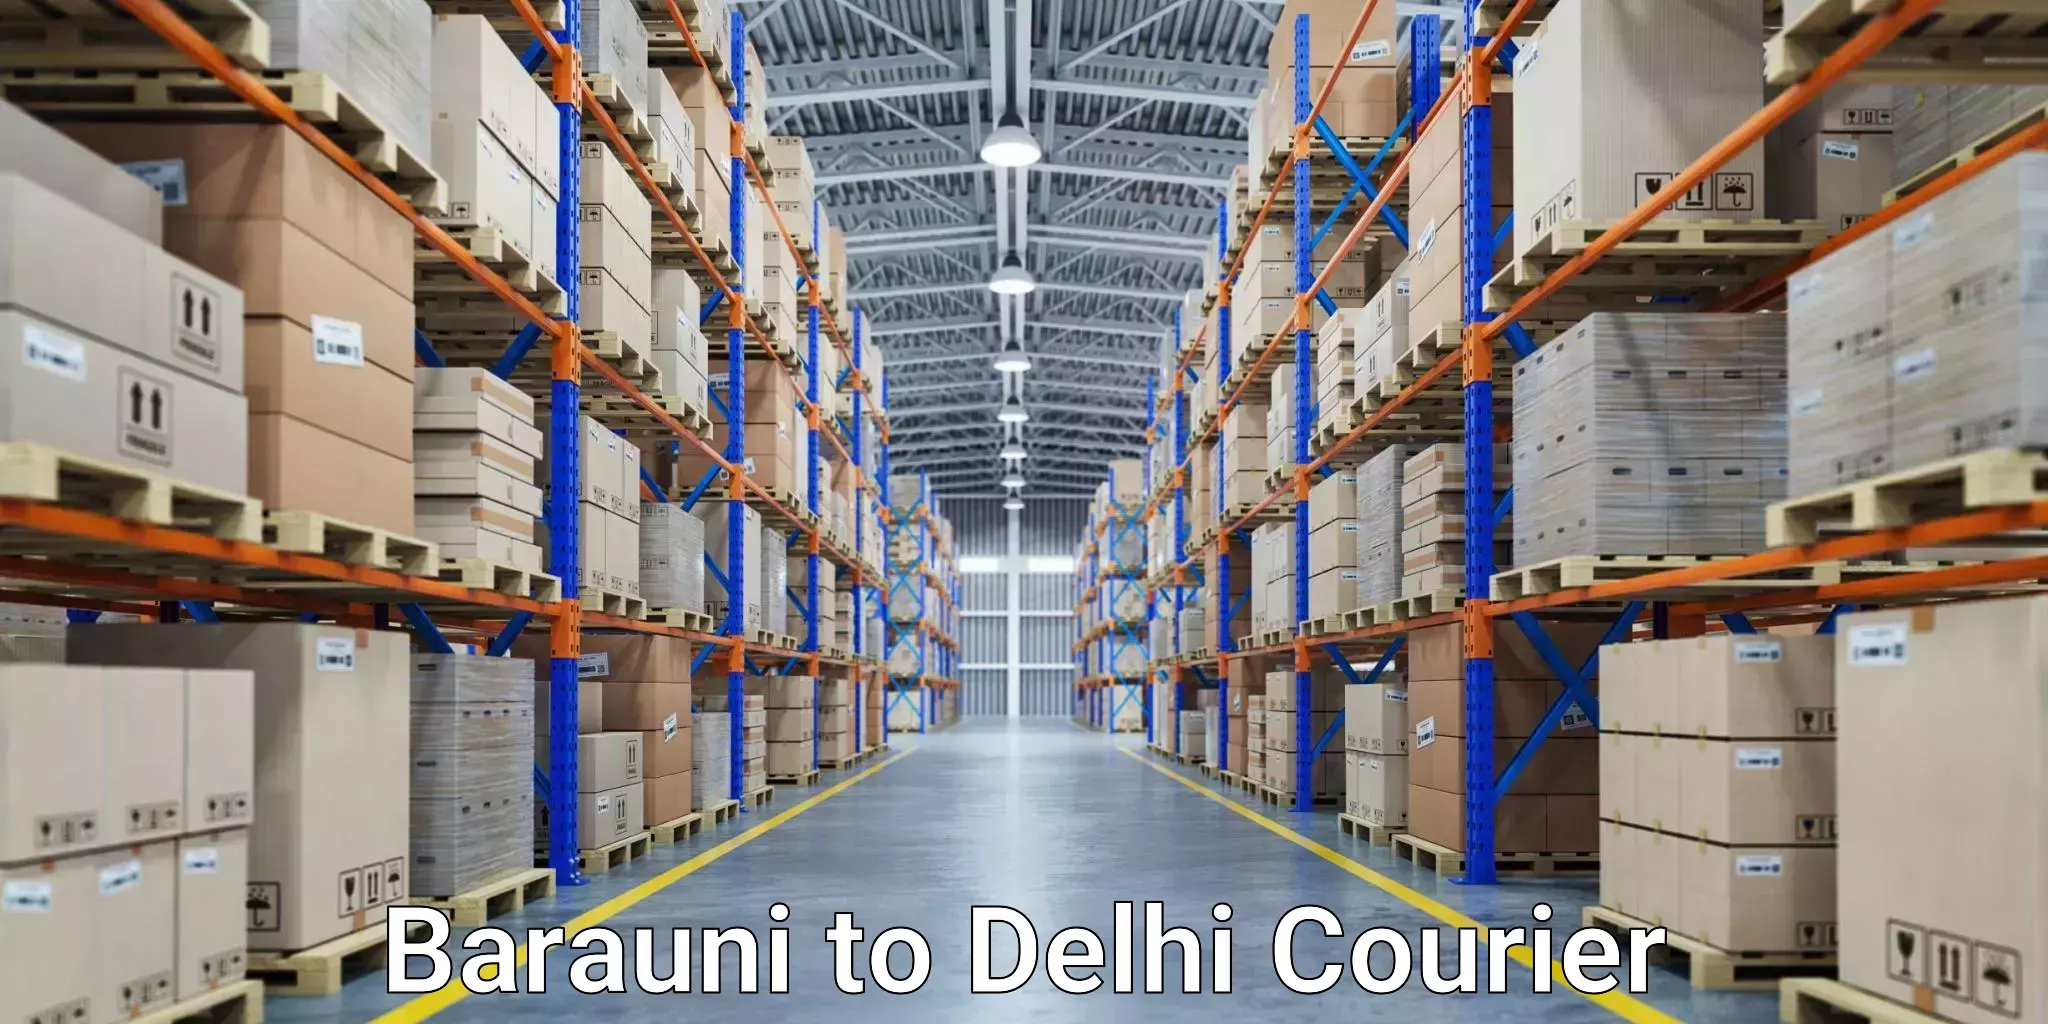 Digital courier platforms Barauni to Delhi